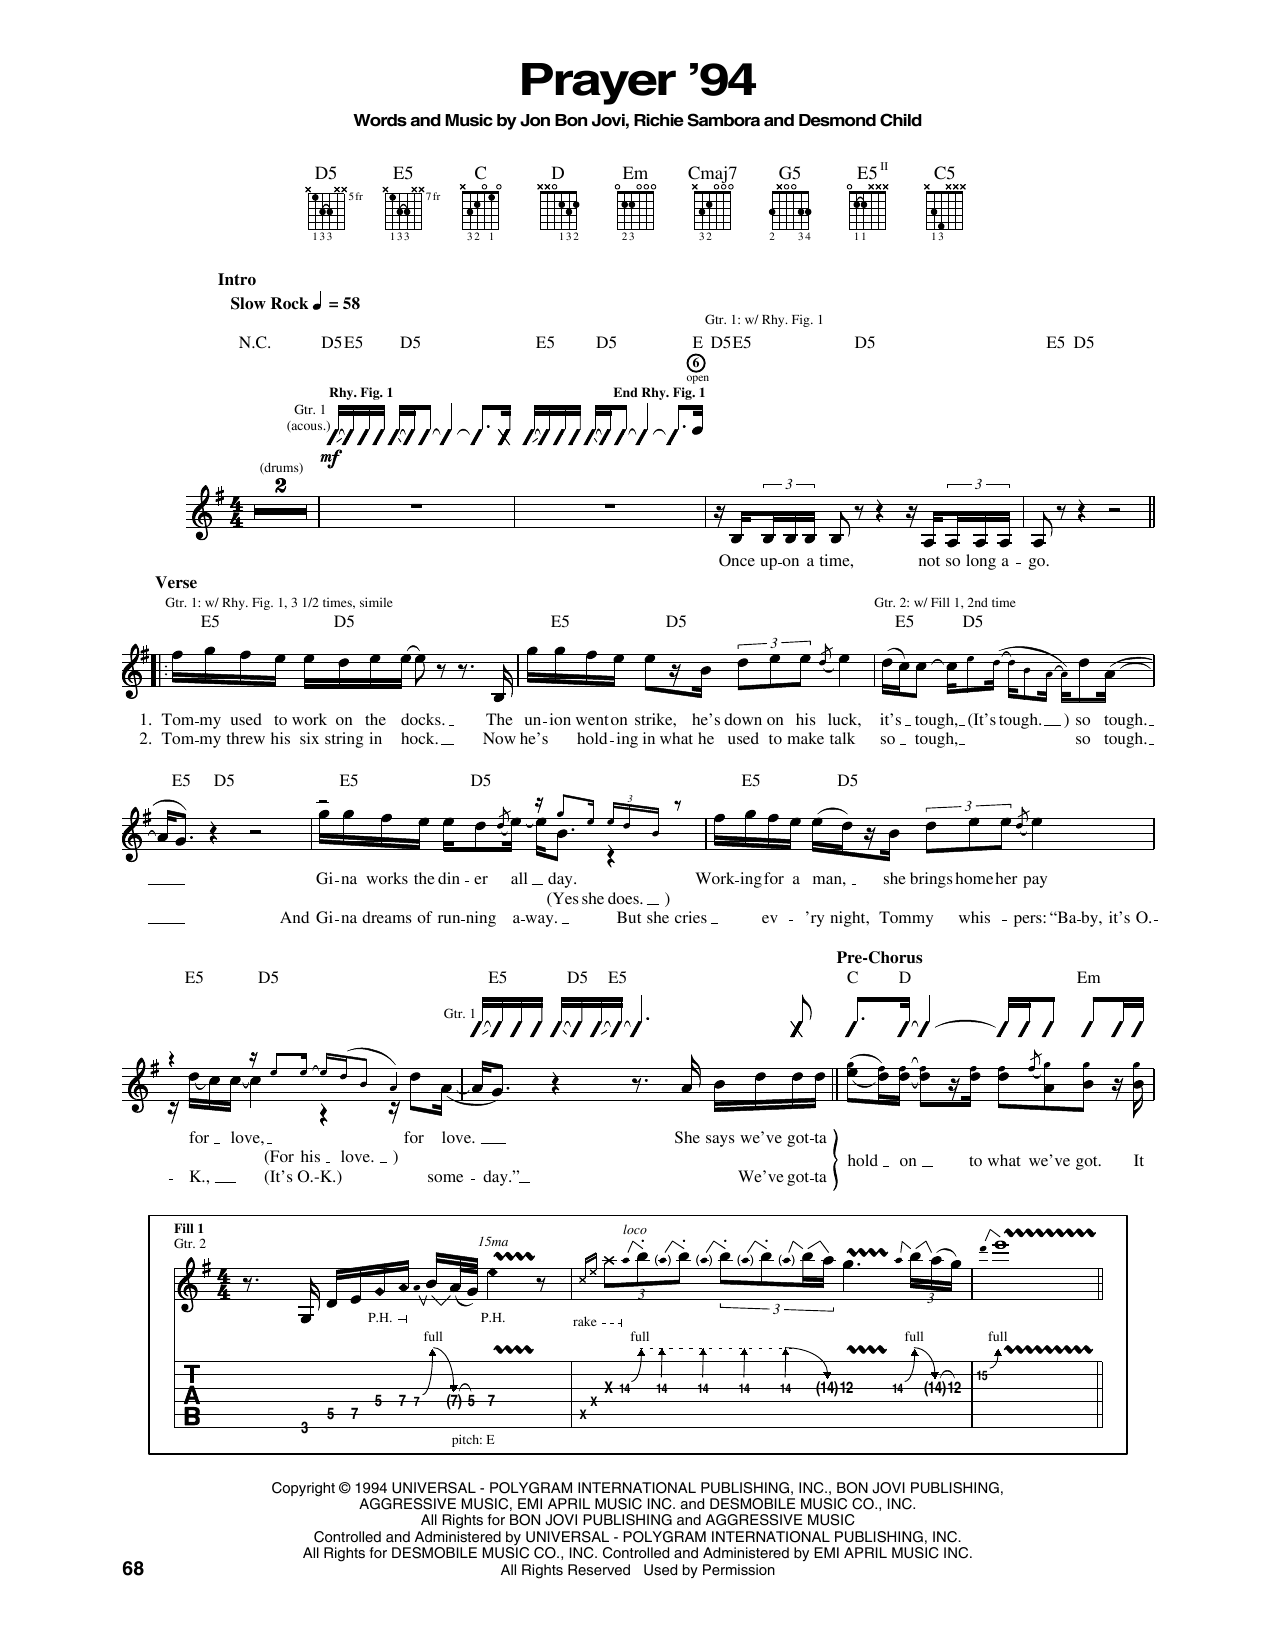 Bon Jovi Prayer '94 sheet music notes and chords arranged for Guitar Tab